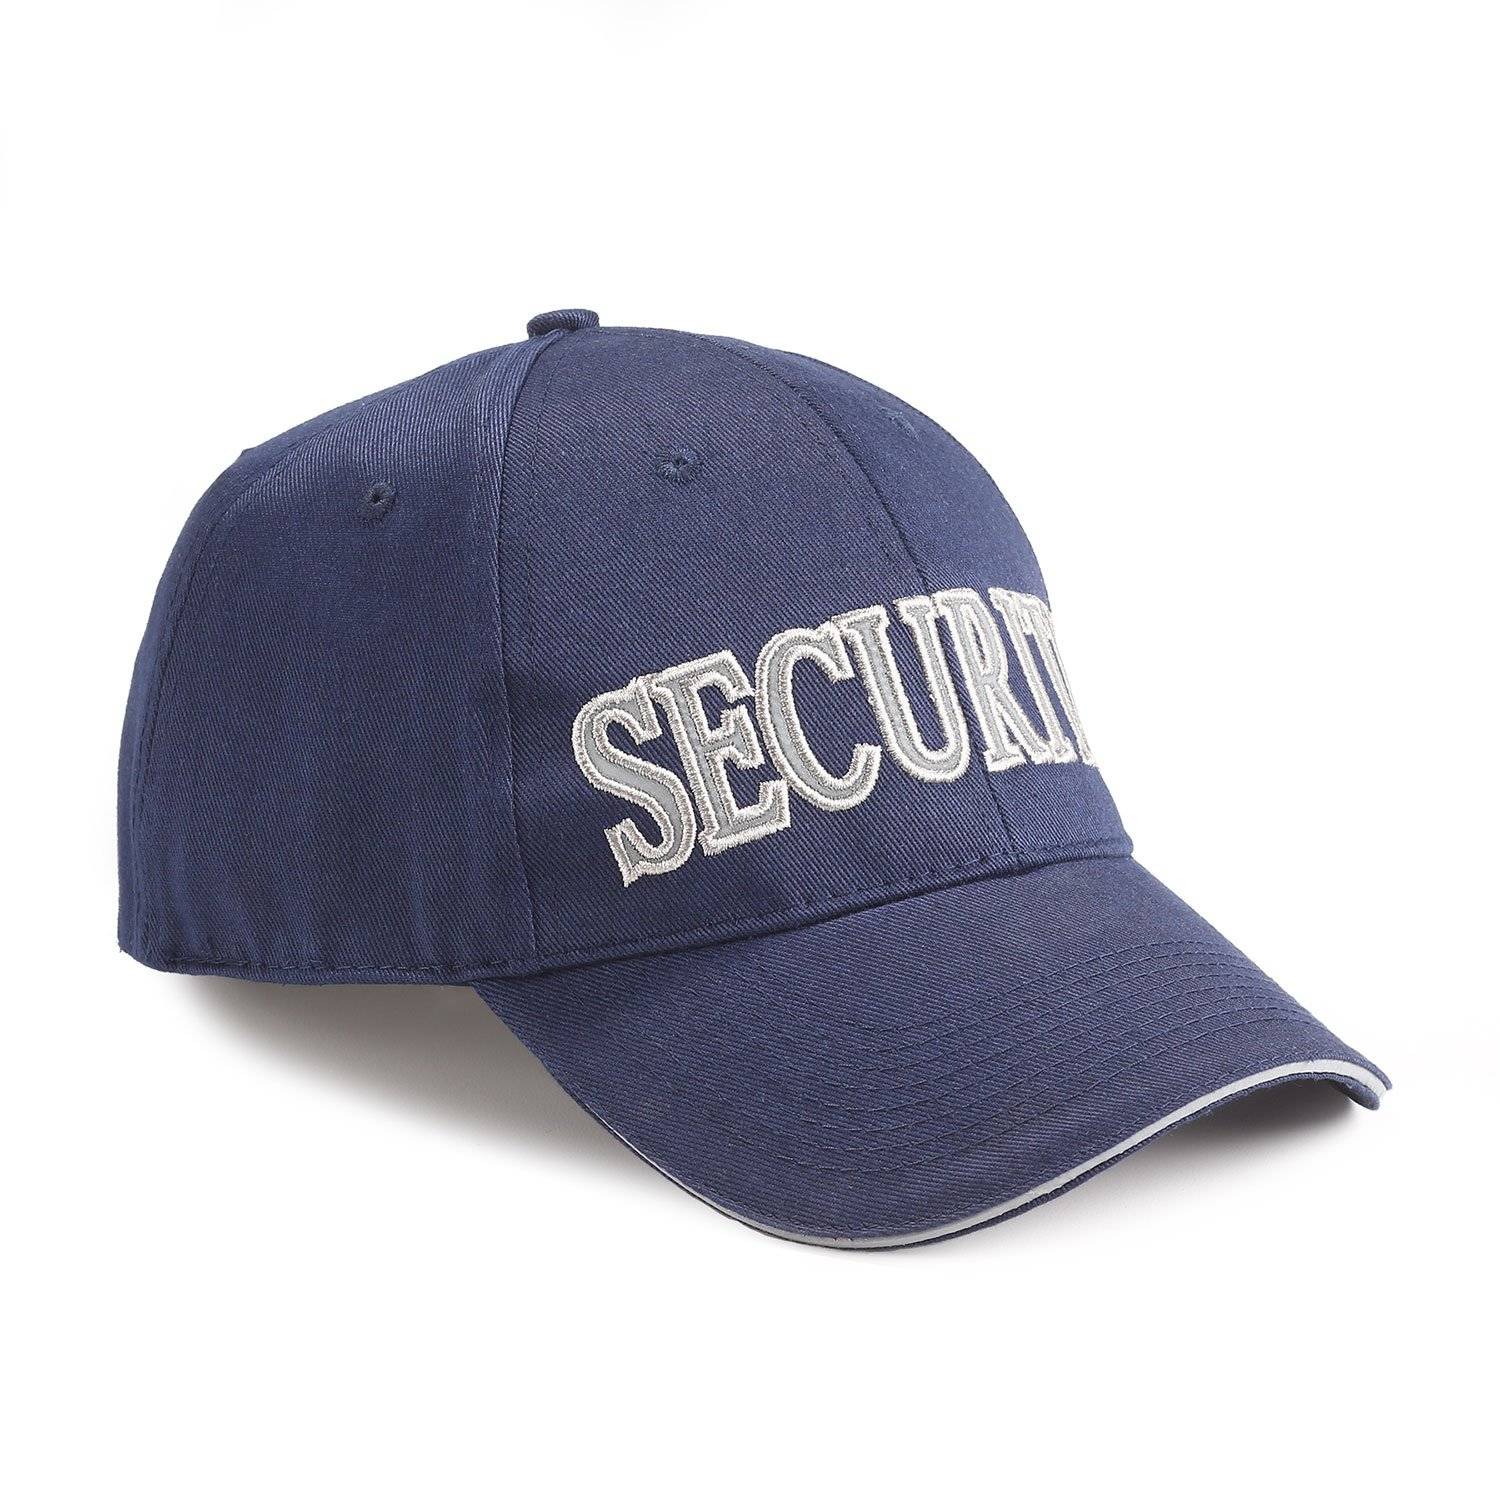 LAWPRO REFLECTIVE SECURITY CAP